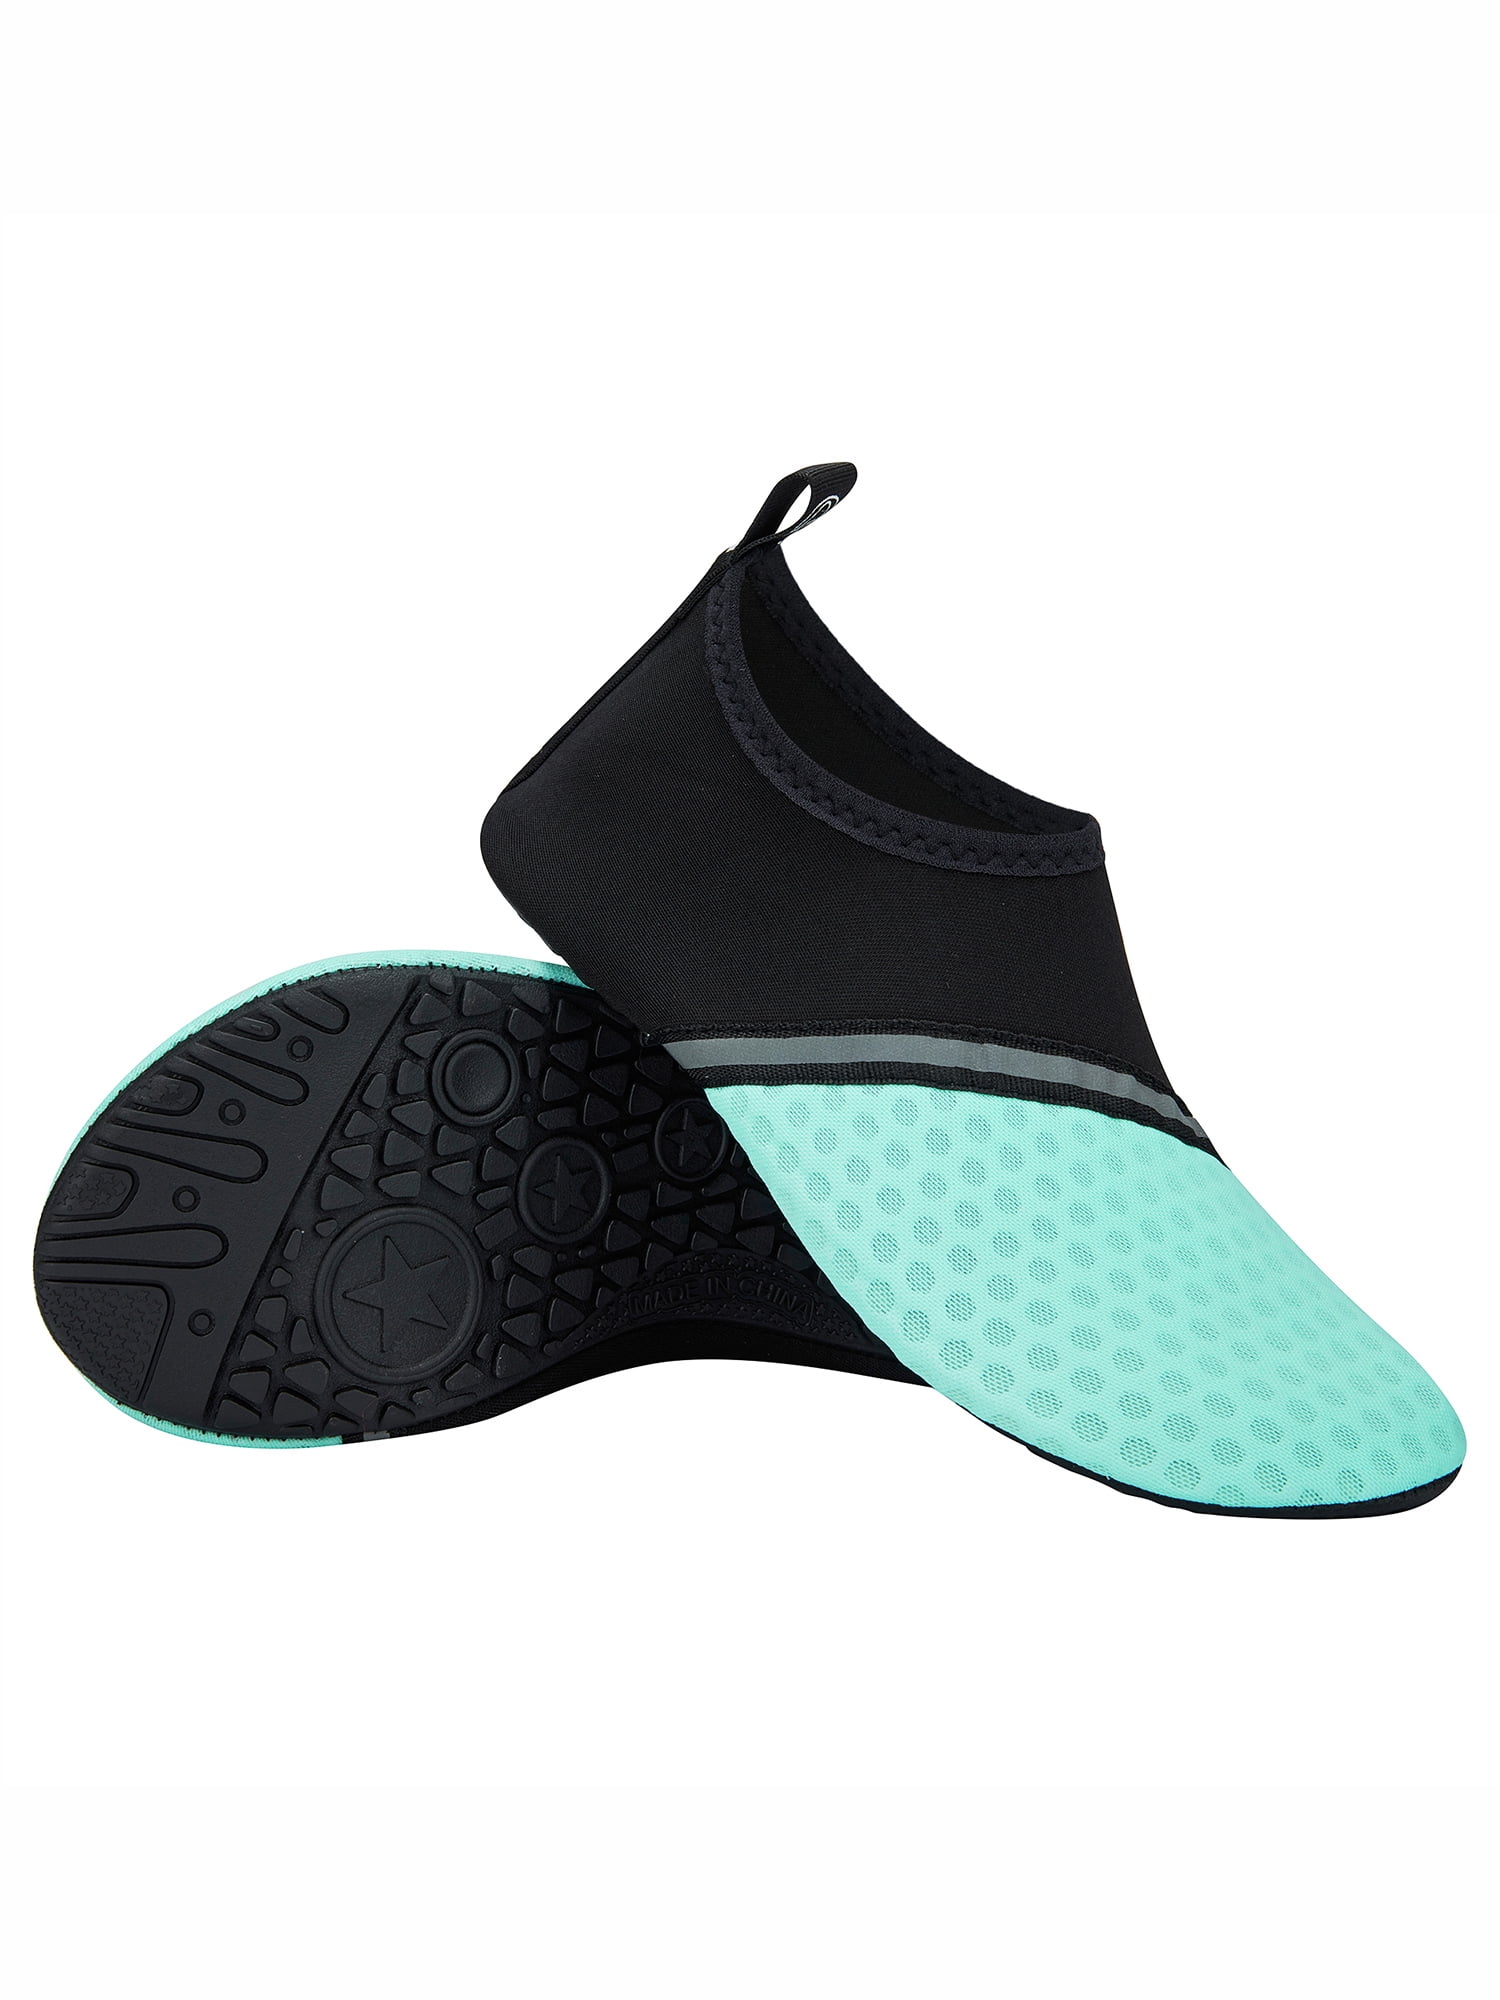 Kids/Womens/Mens Water Shoes Barefoot Quick Dry Aqua Aqua Socks for Beach Outdoor Swim Yoga Sports 